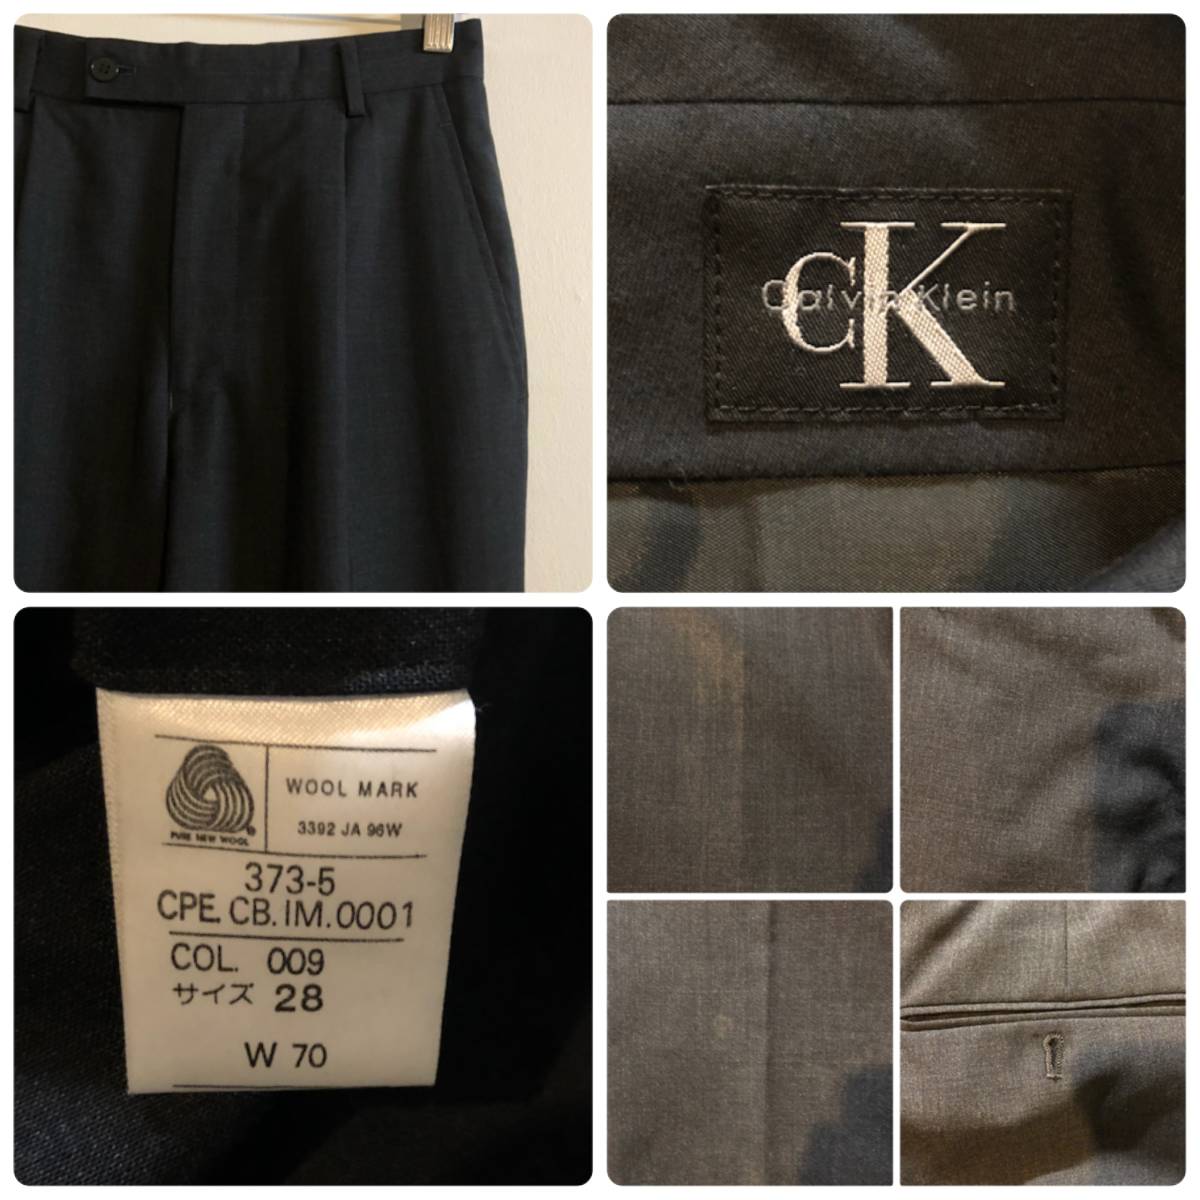  Calvin Klein design slacks pants 28